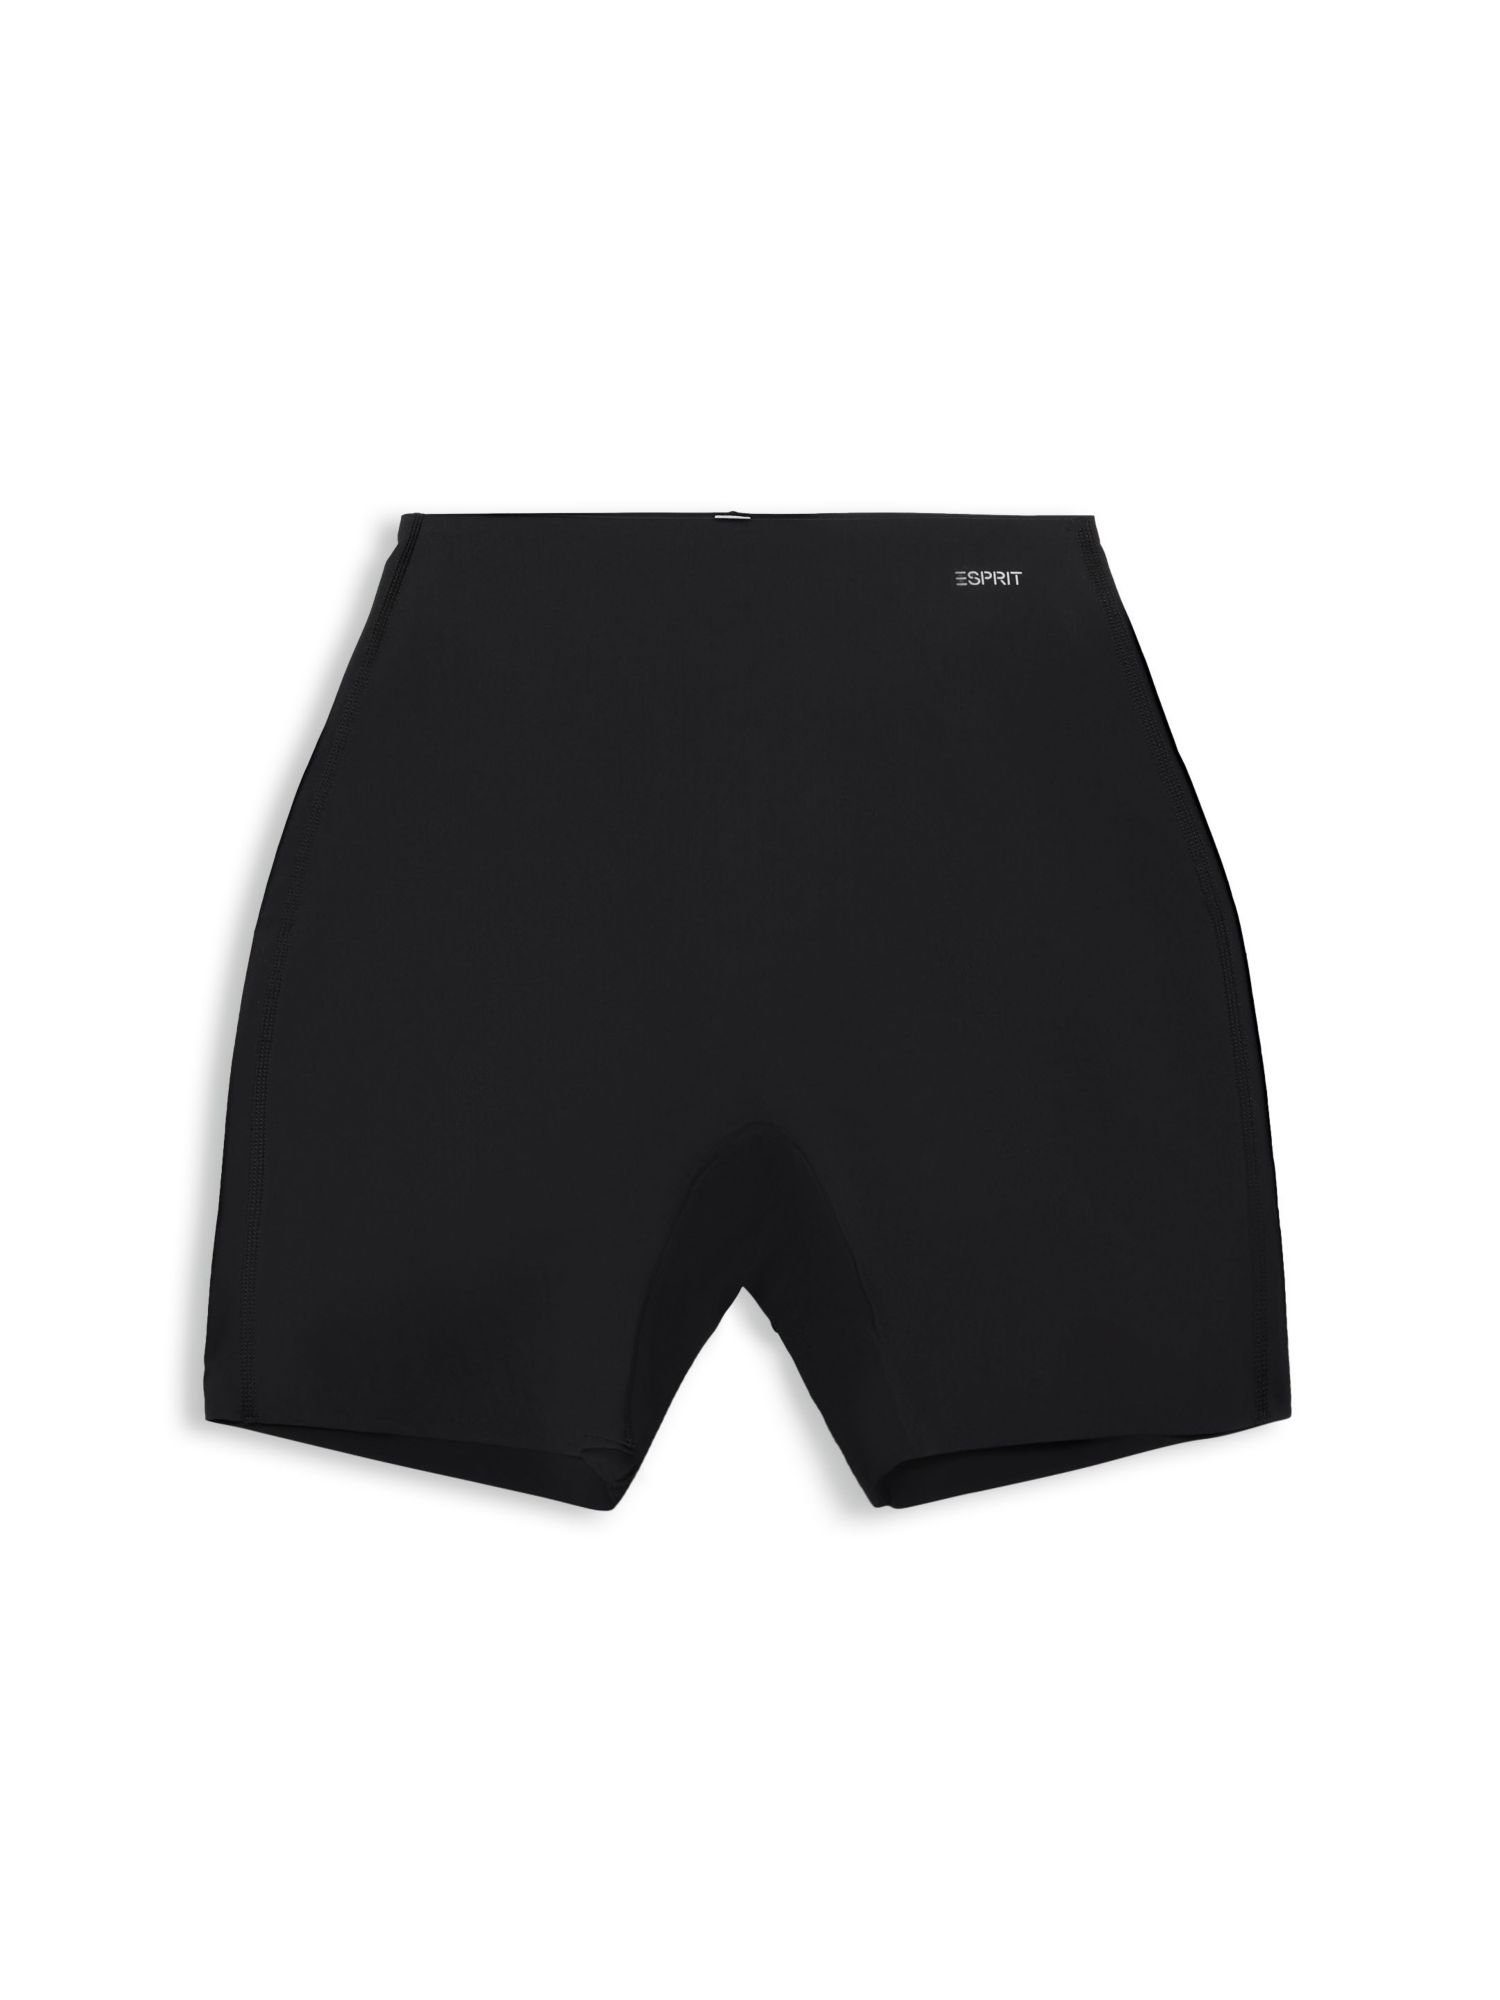 Esprit Hipster BLACK Shaping-Effekt mit dezentem Recycelt: Shorts